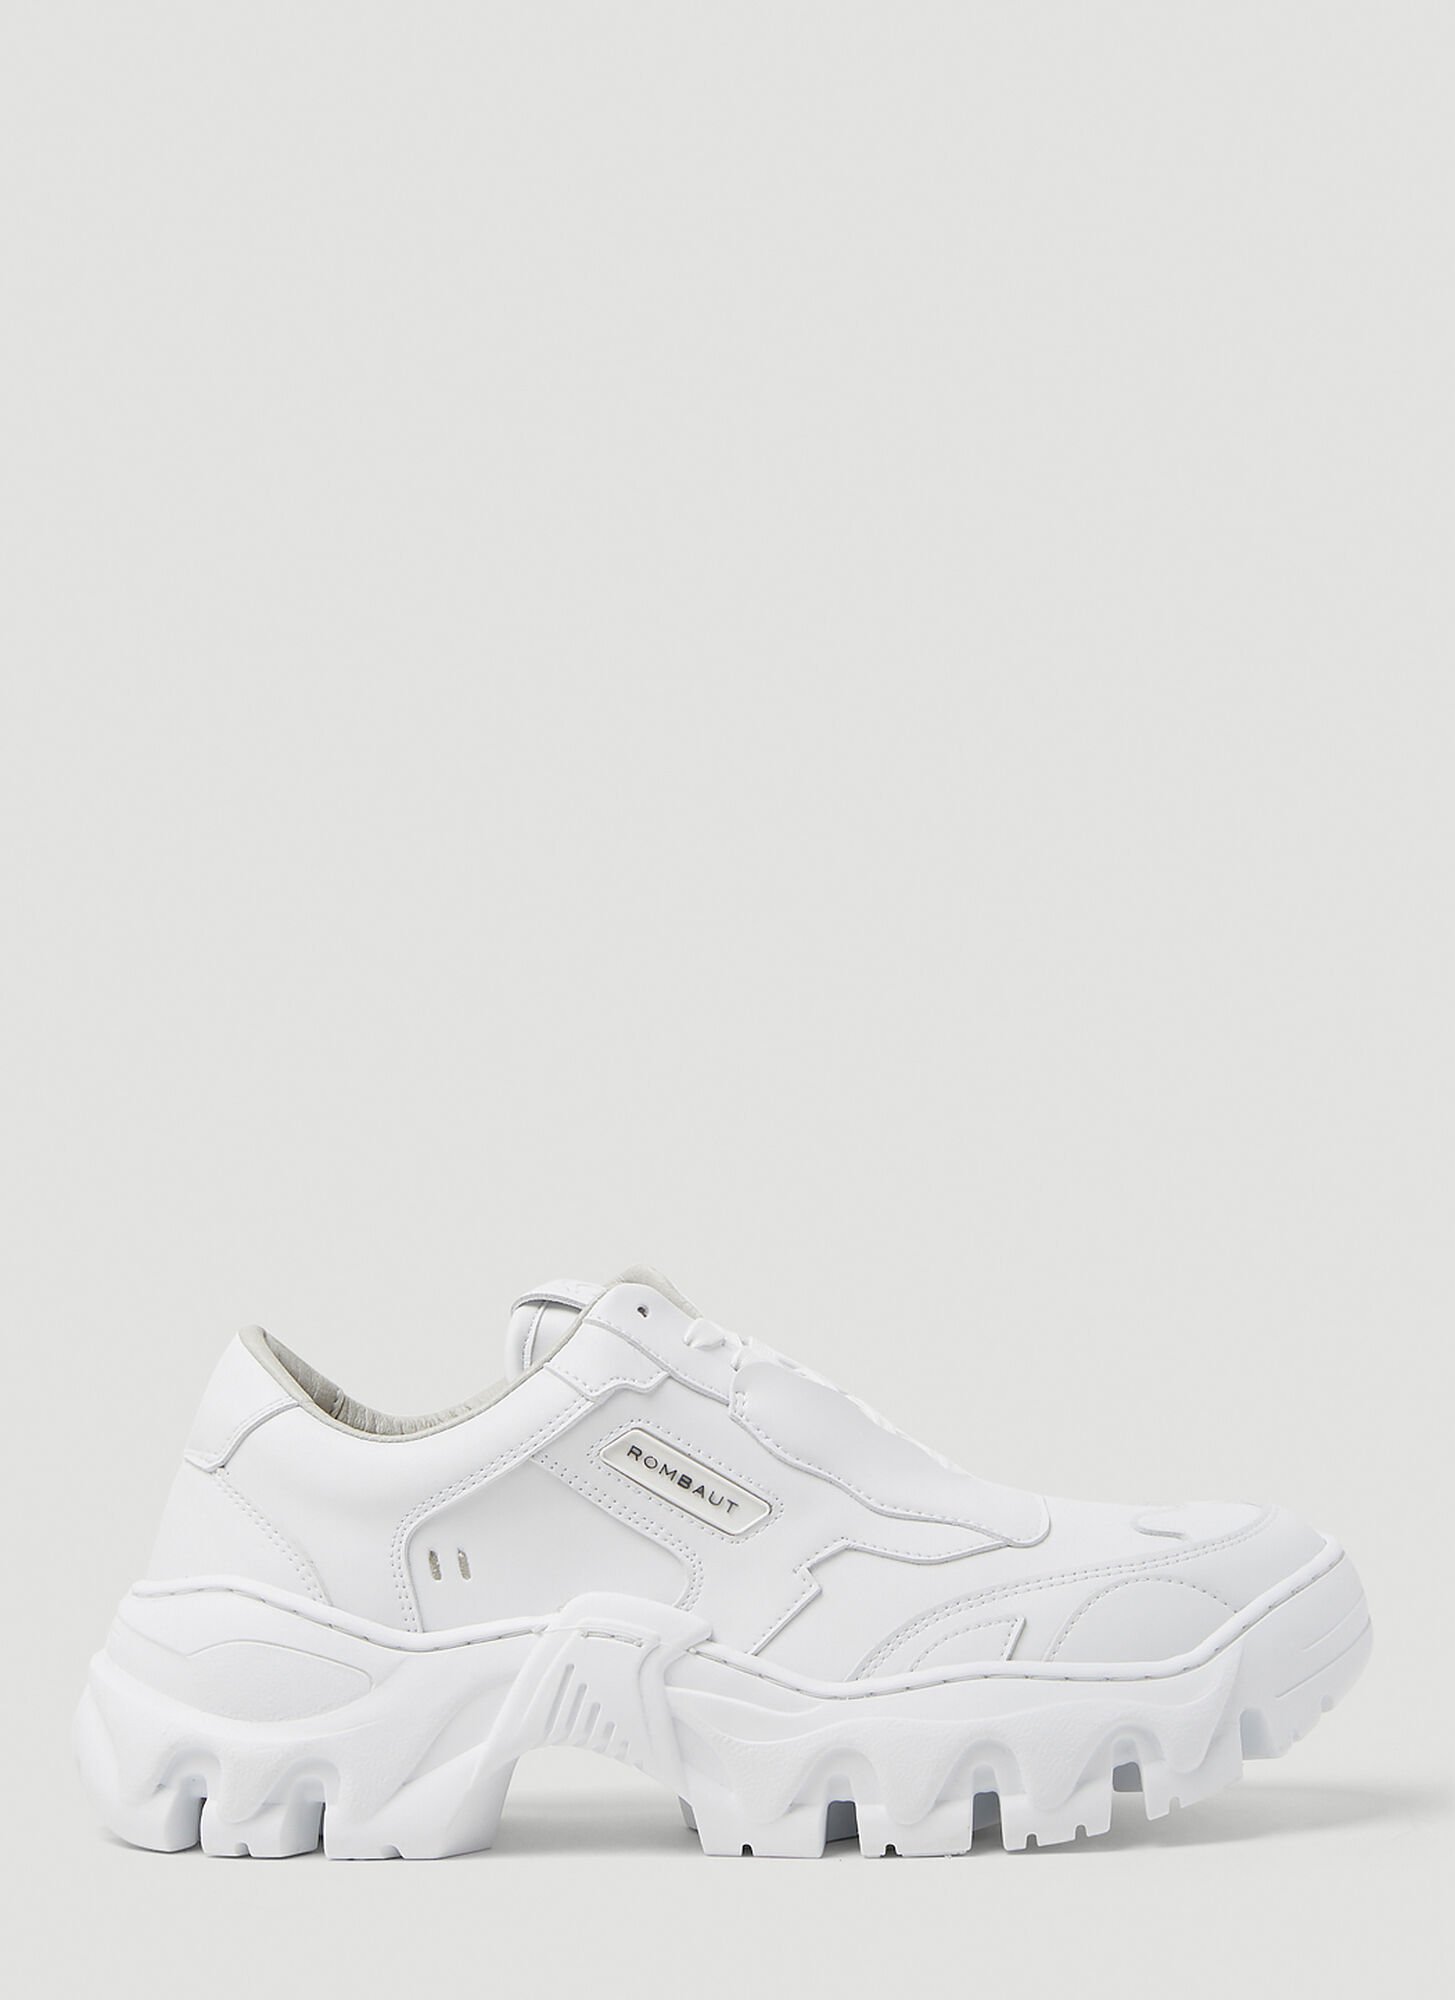 Rombaut Boccaccio Ii Low Sneakers Unisex White